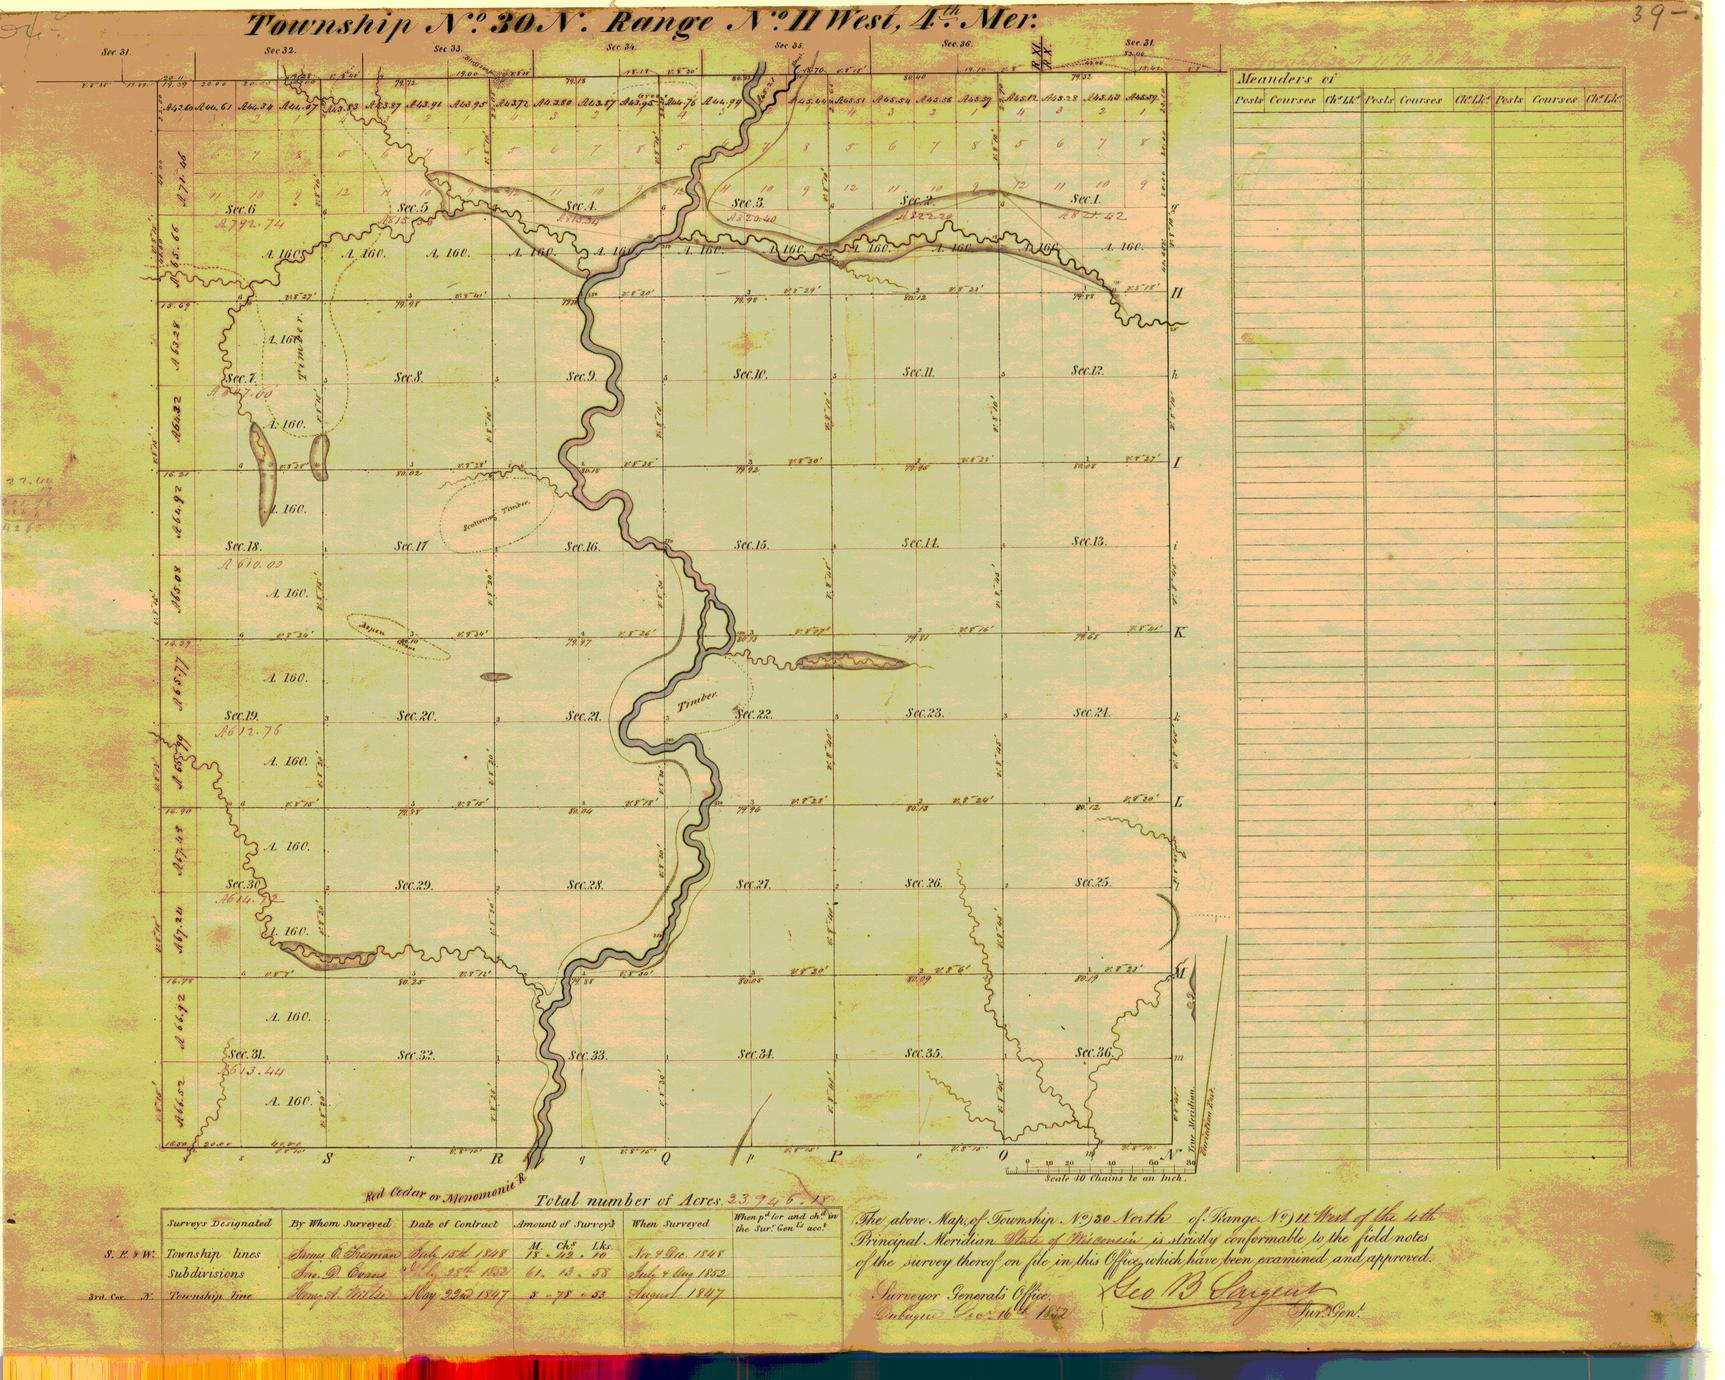 [Public Land Survey System map: Wisconsin Township 30 North, Range 11 West]